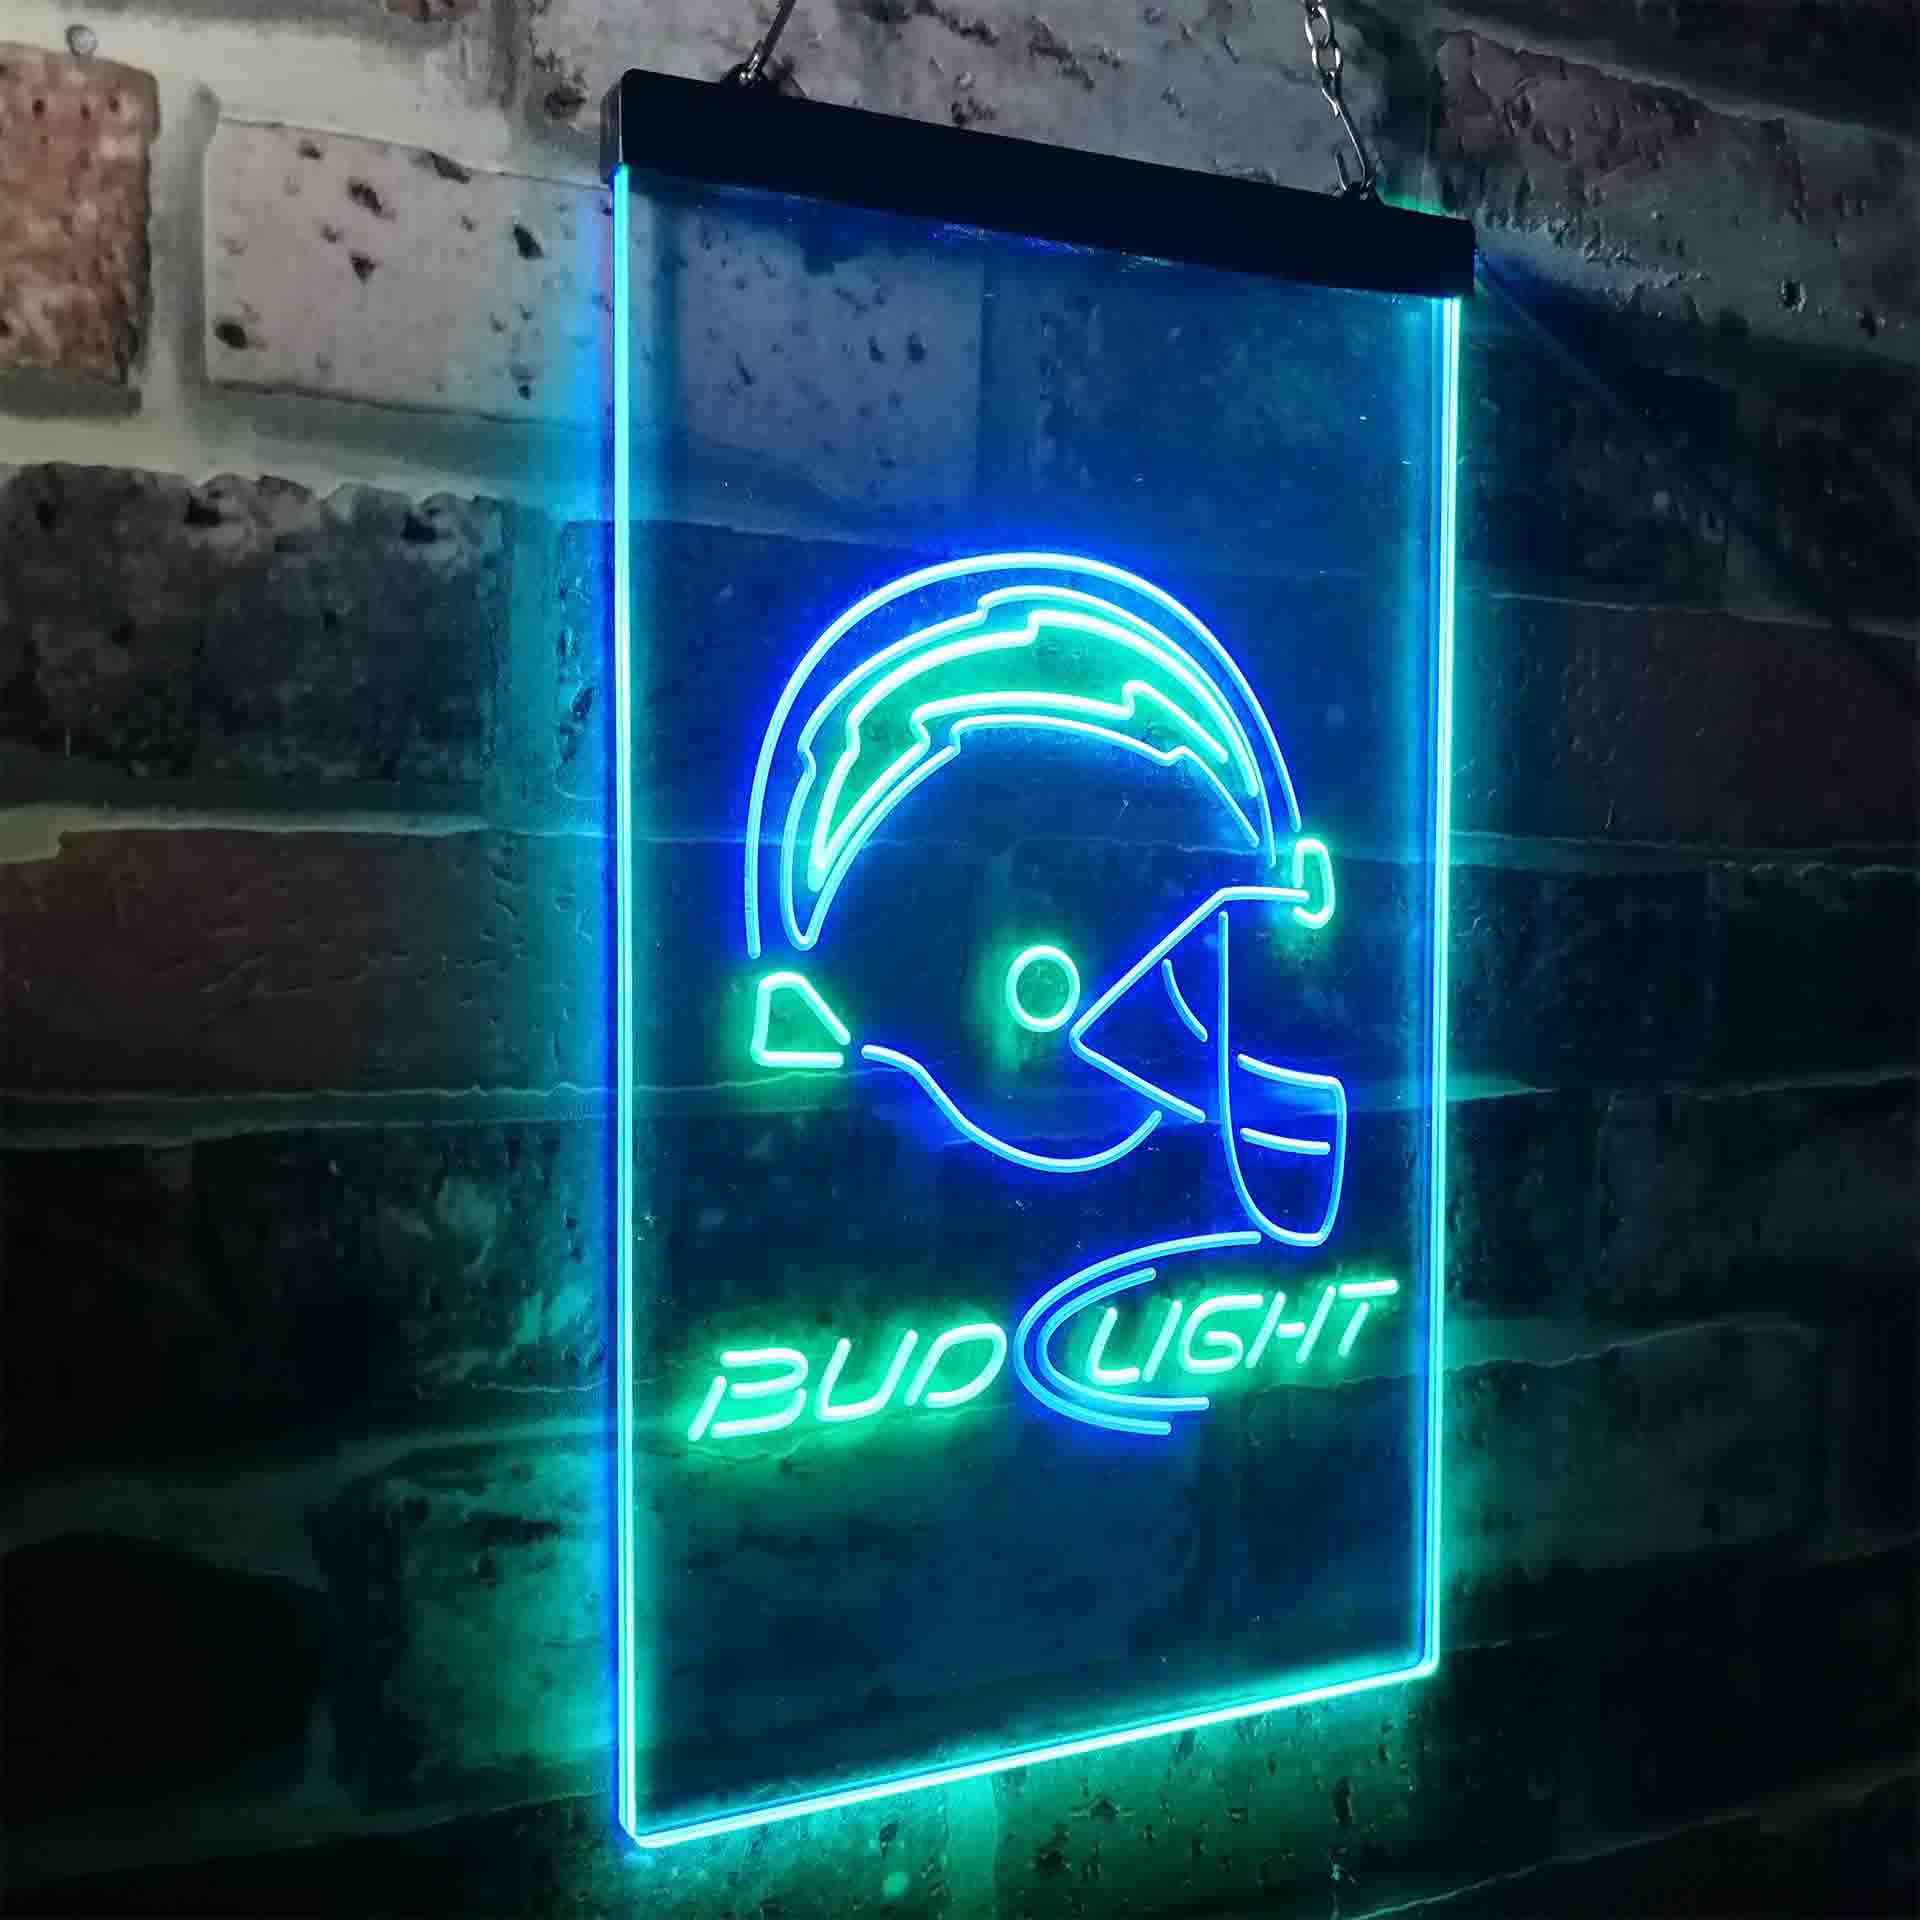 San Diego Chargers Bud Light Neon-Like LED Sign